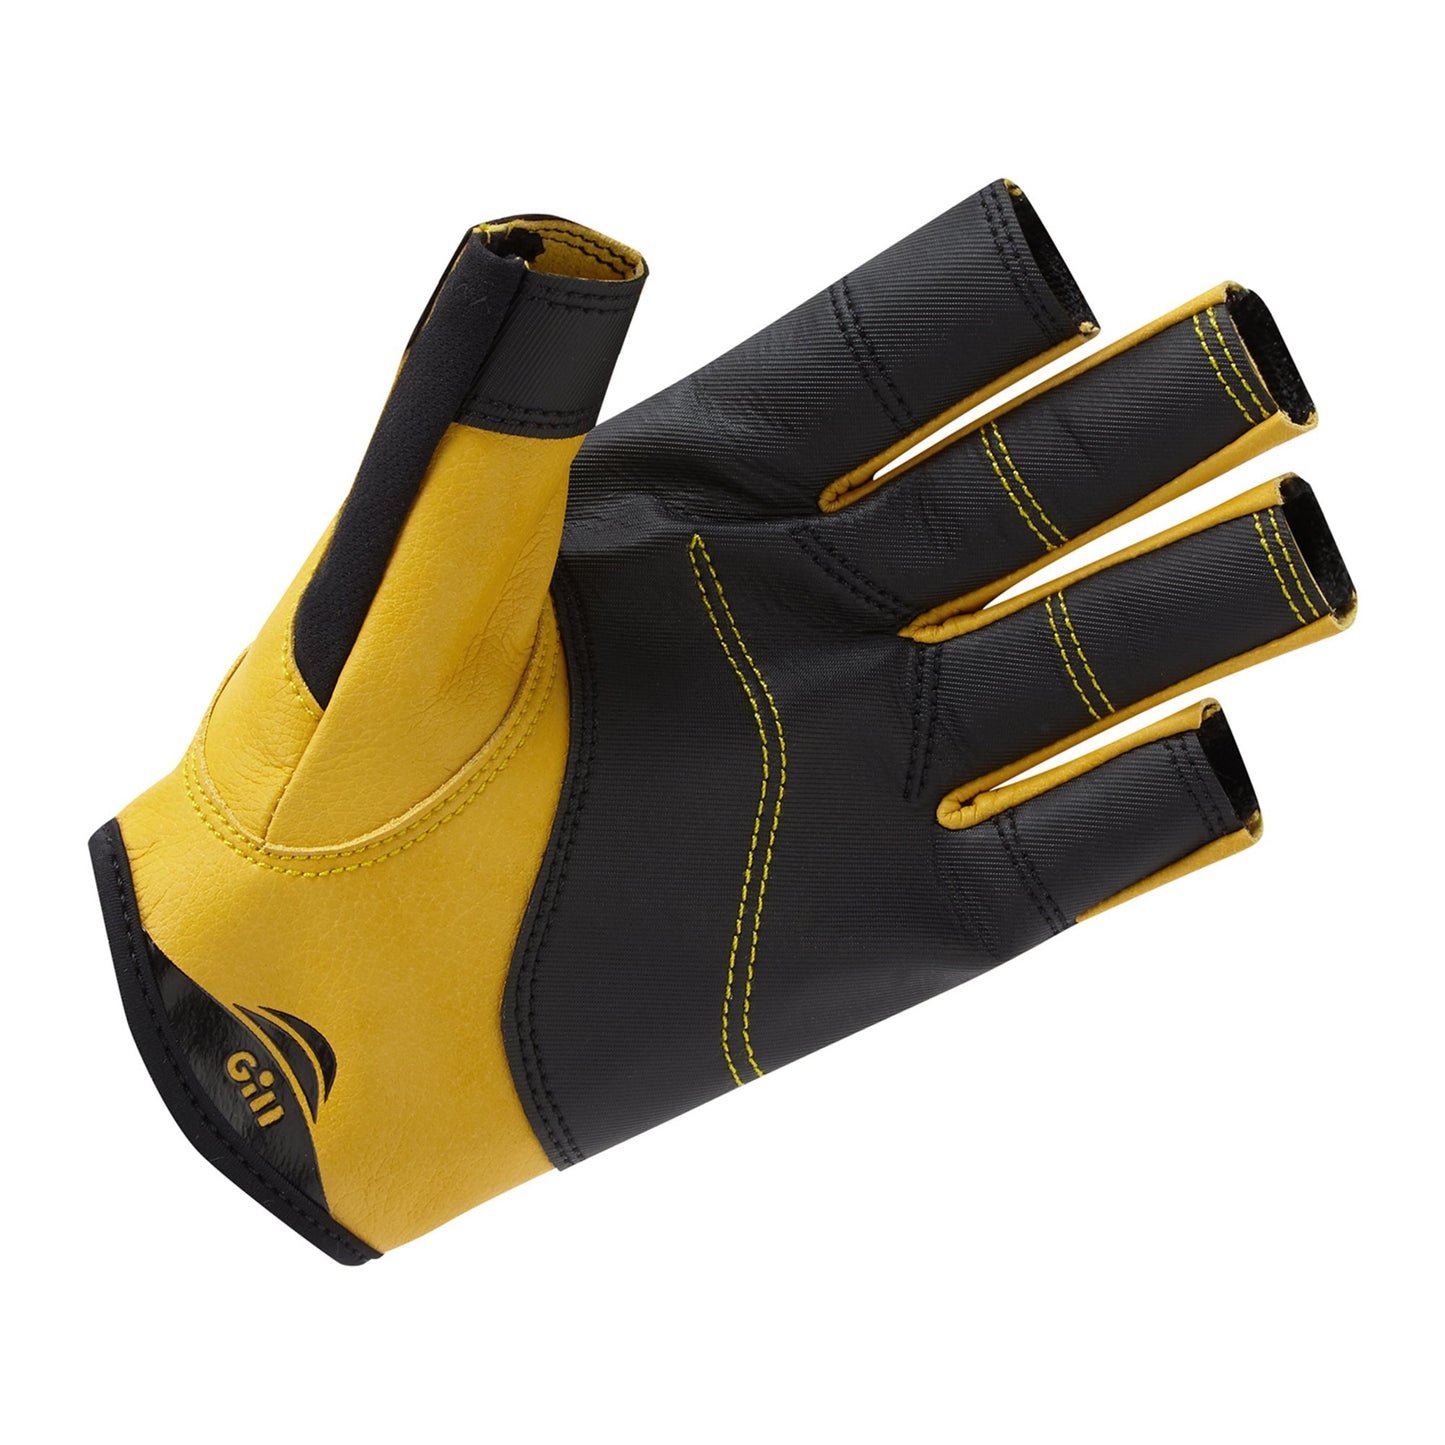 GILL Pro Handschuhe LF 7451